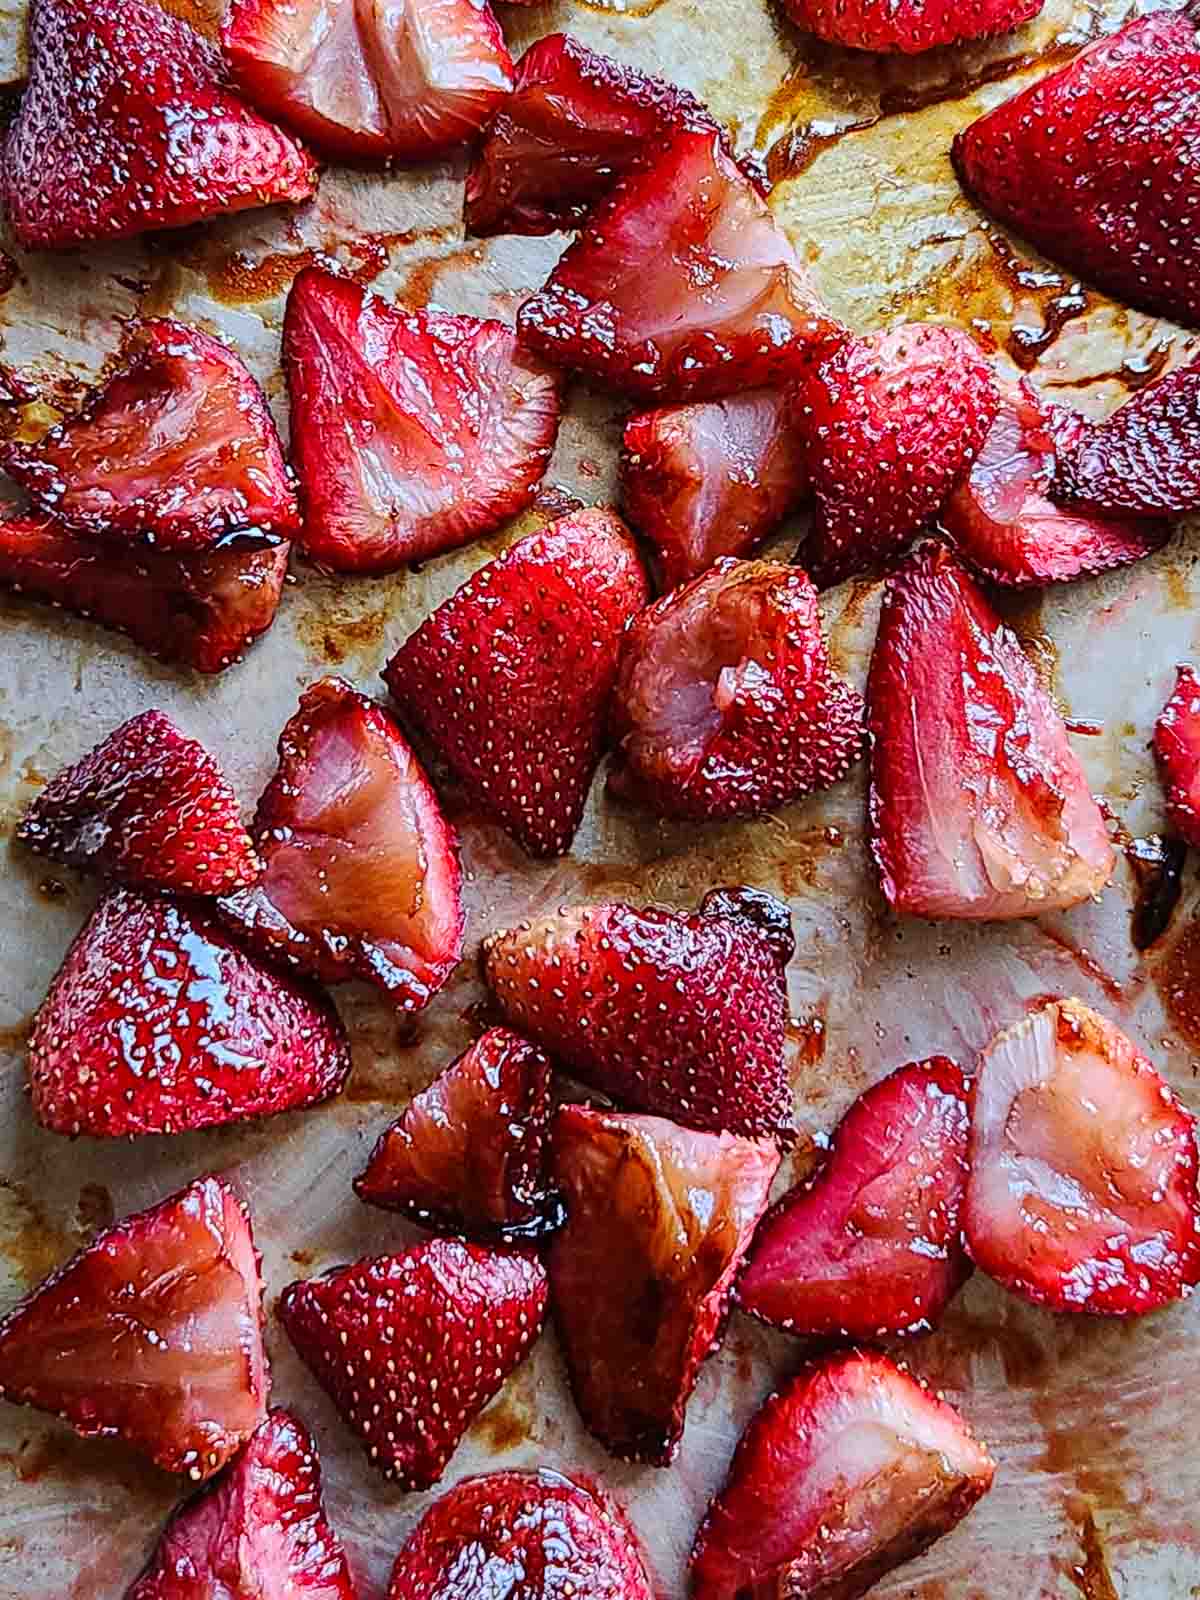 Roasted strawberries on a metal baking sheet.